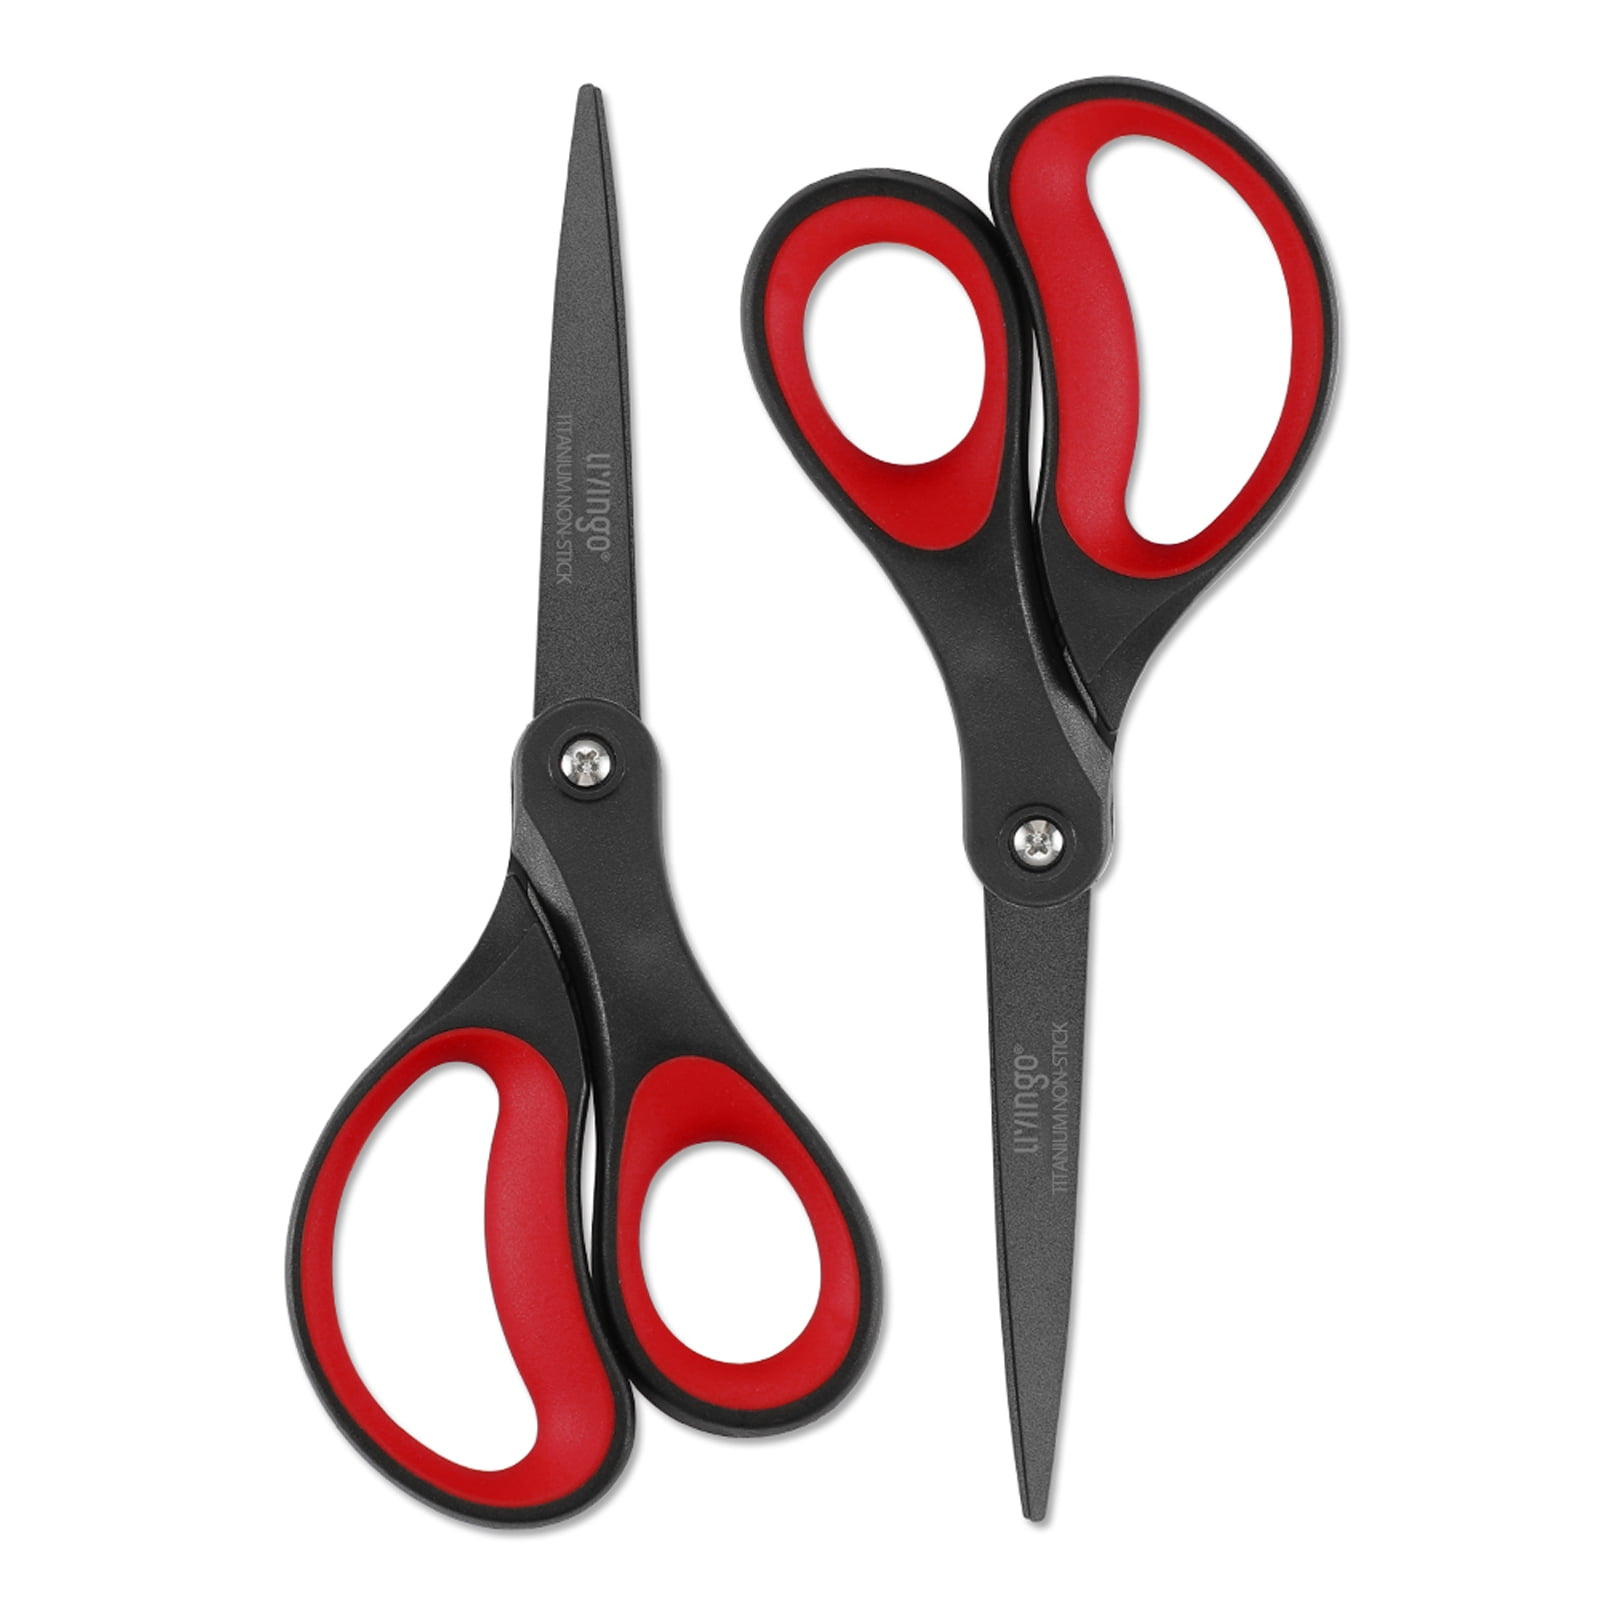 Zyliss Scissors & Shears Set, Multi-Purpose